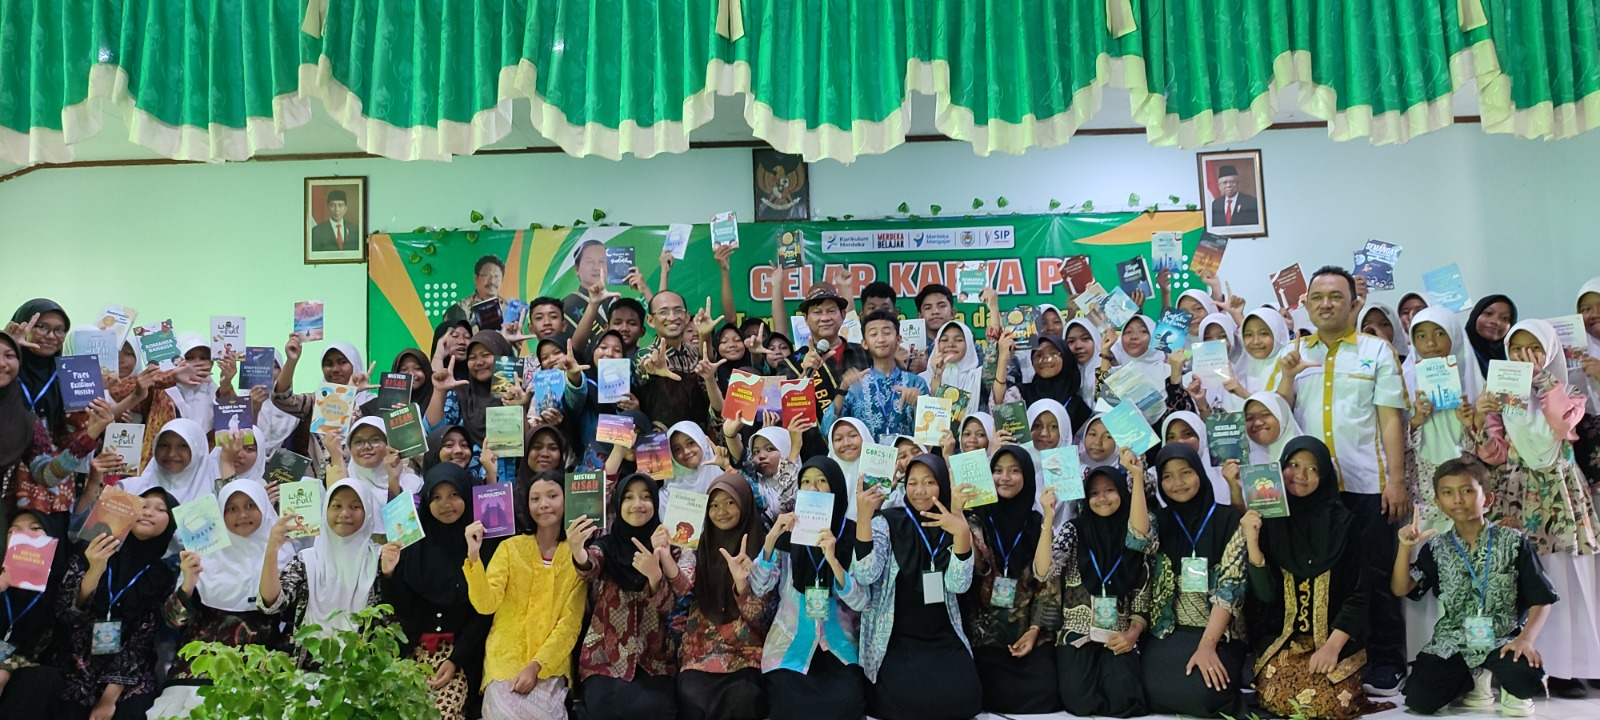 89 Judul Buku Karya Siswa SMP N 1 Banyumas terbitan SIP Publishing, Diluncurkan Duta Baca Indonesia 